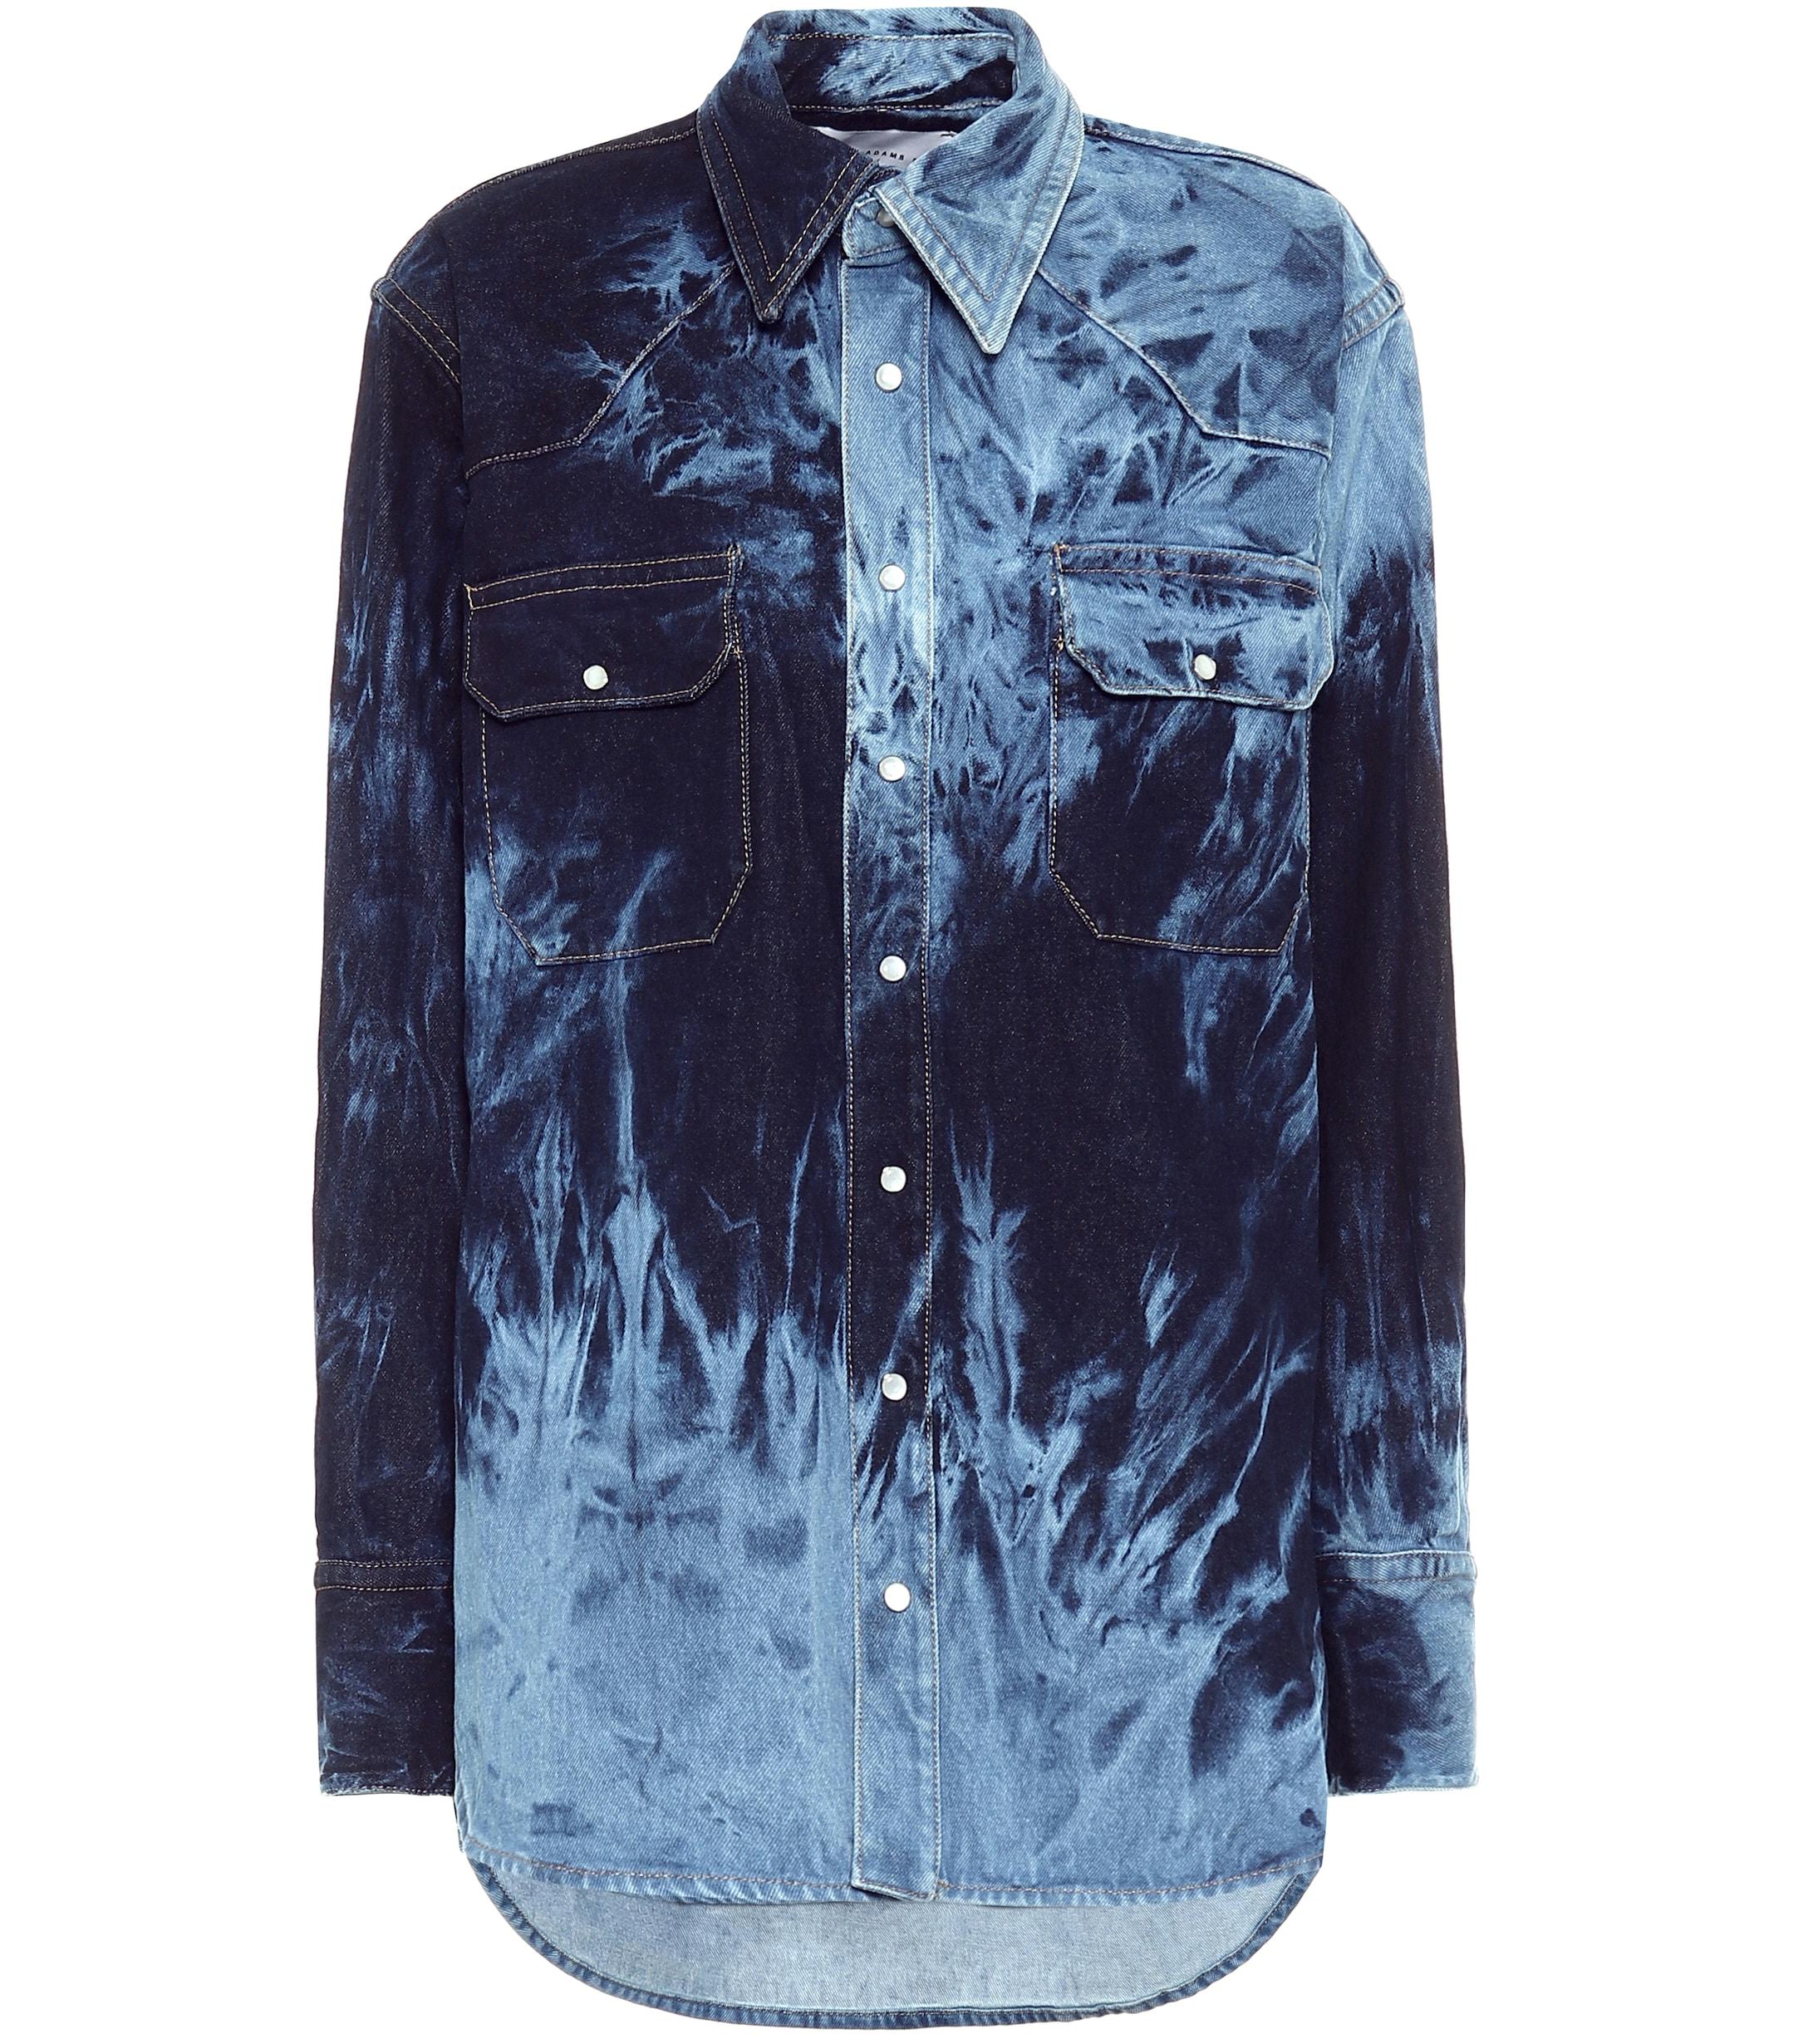 Matthew Adams Dolan Tie-dye Denim Shirt in Blue - Lyst